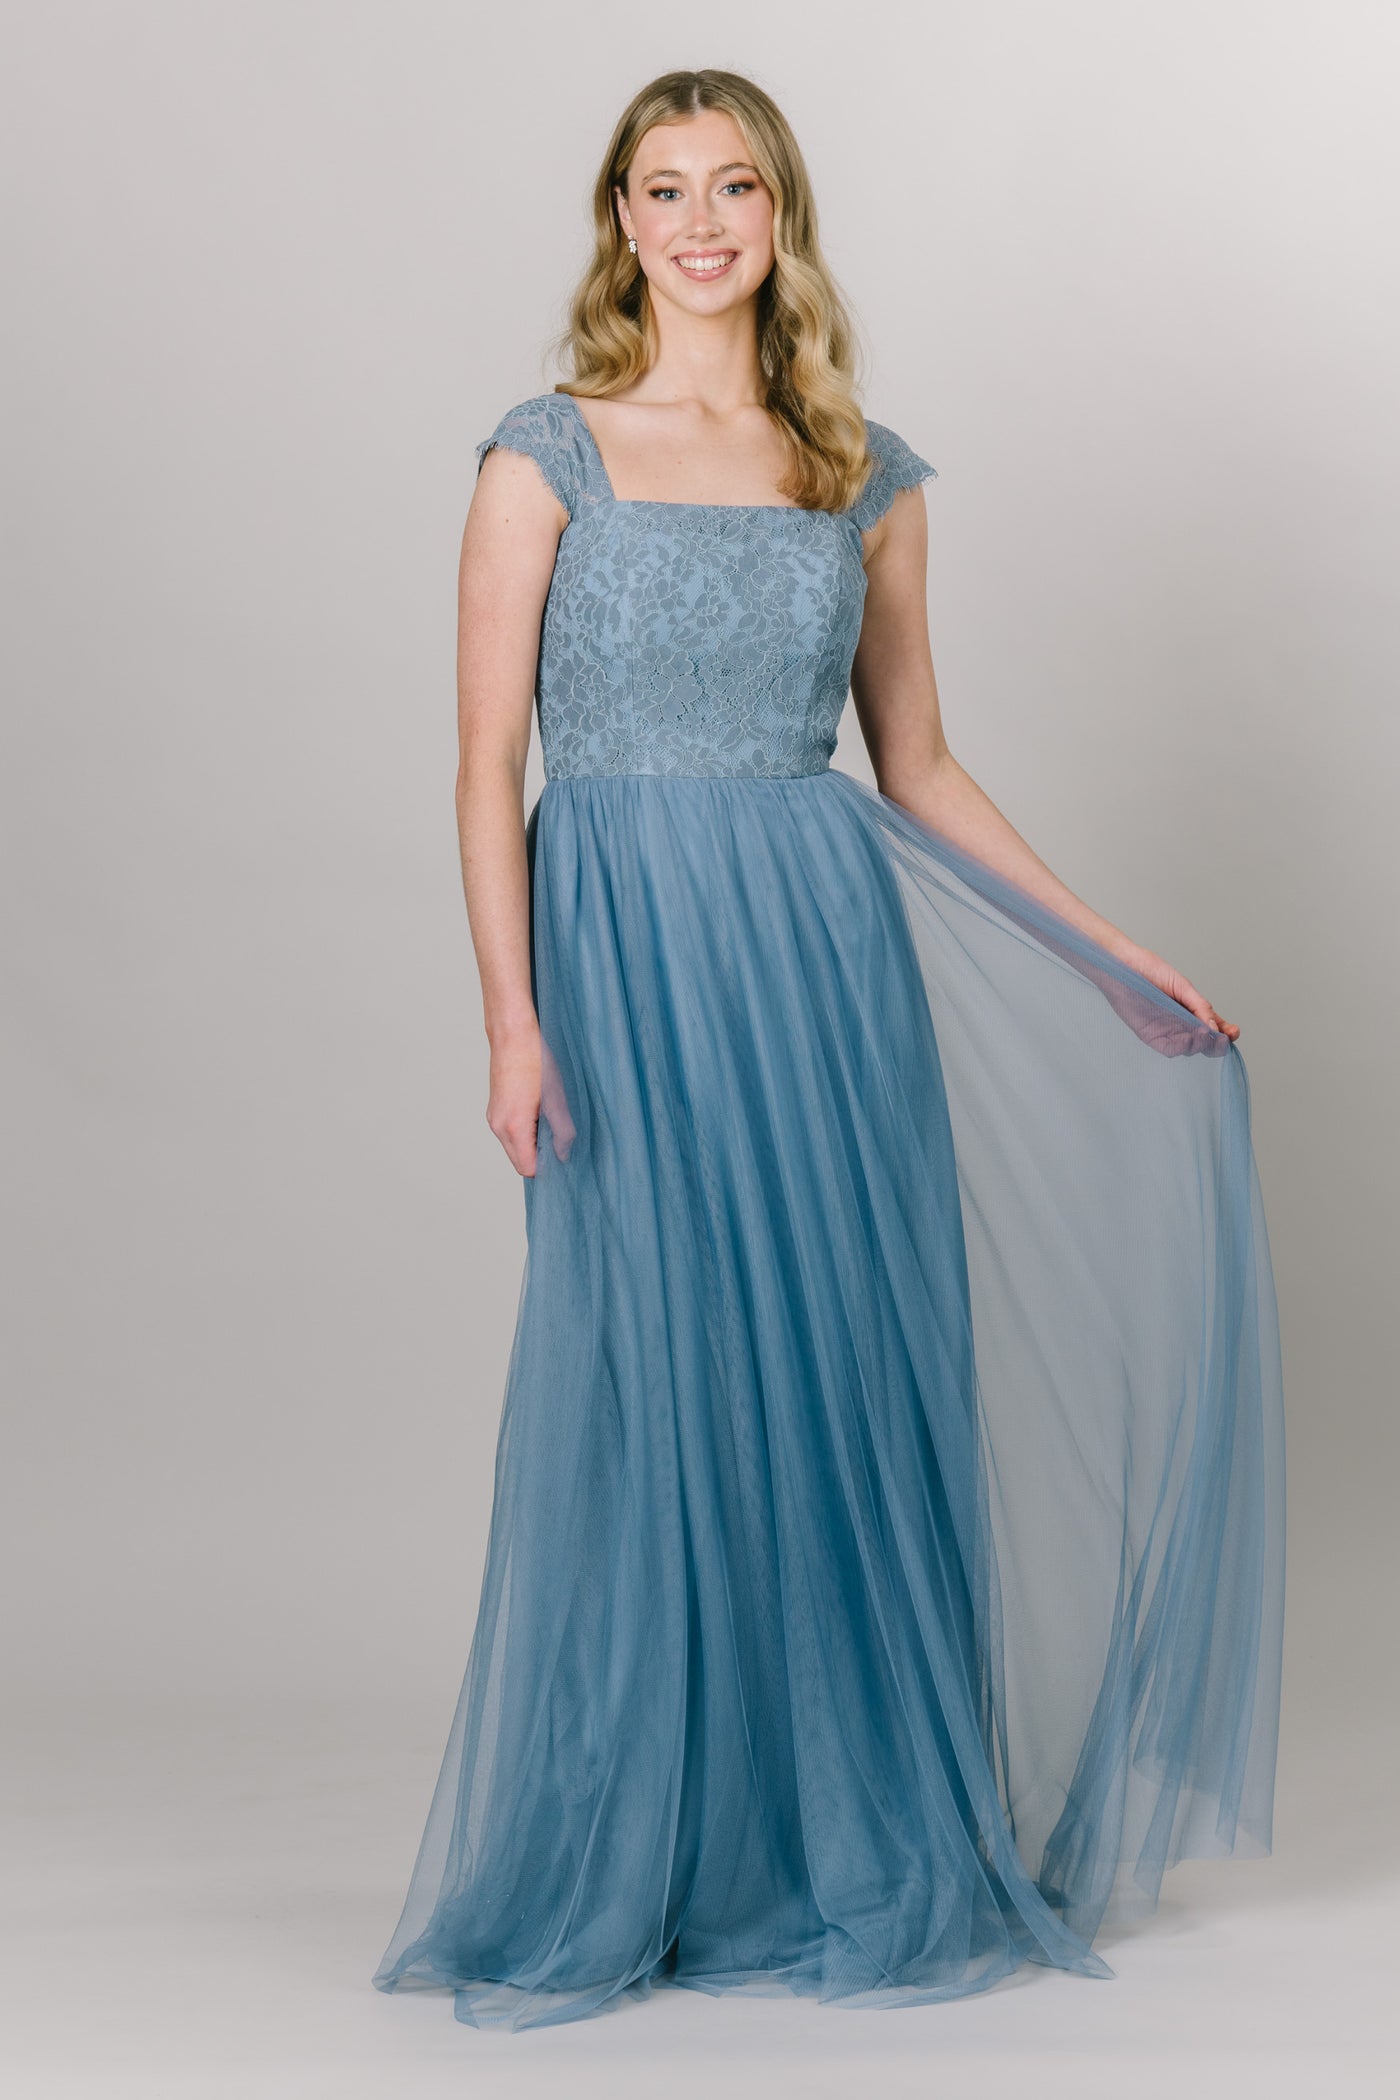 Blue dress with a tulle skirt. Modest Dresses - Modest Prom Dress - Formalwear Modest Dresses - Bridesmaid Modest Dresses. 